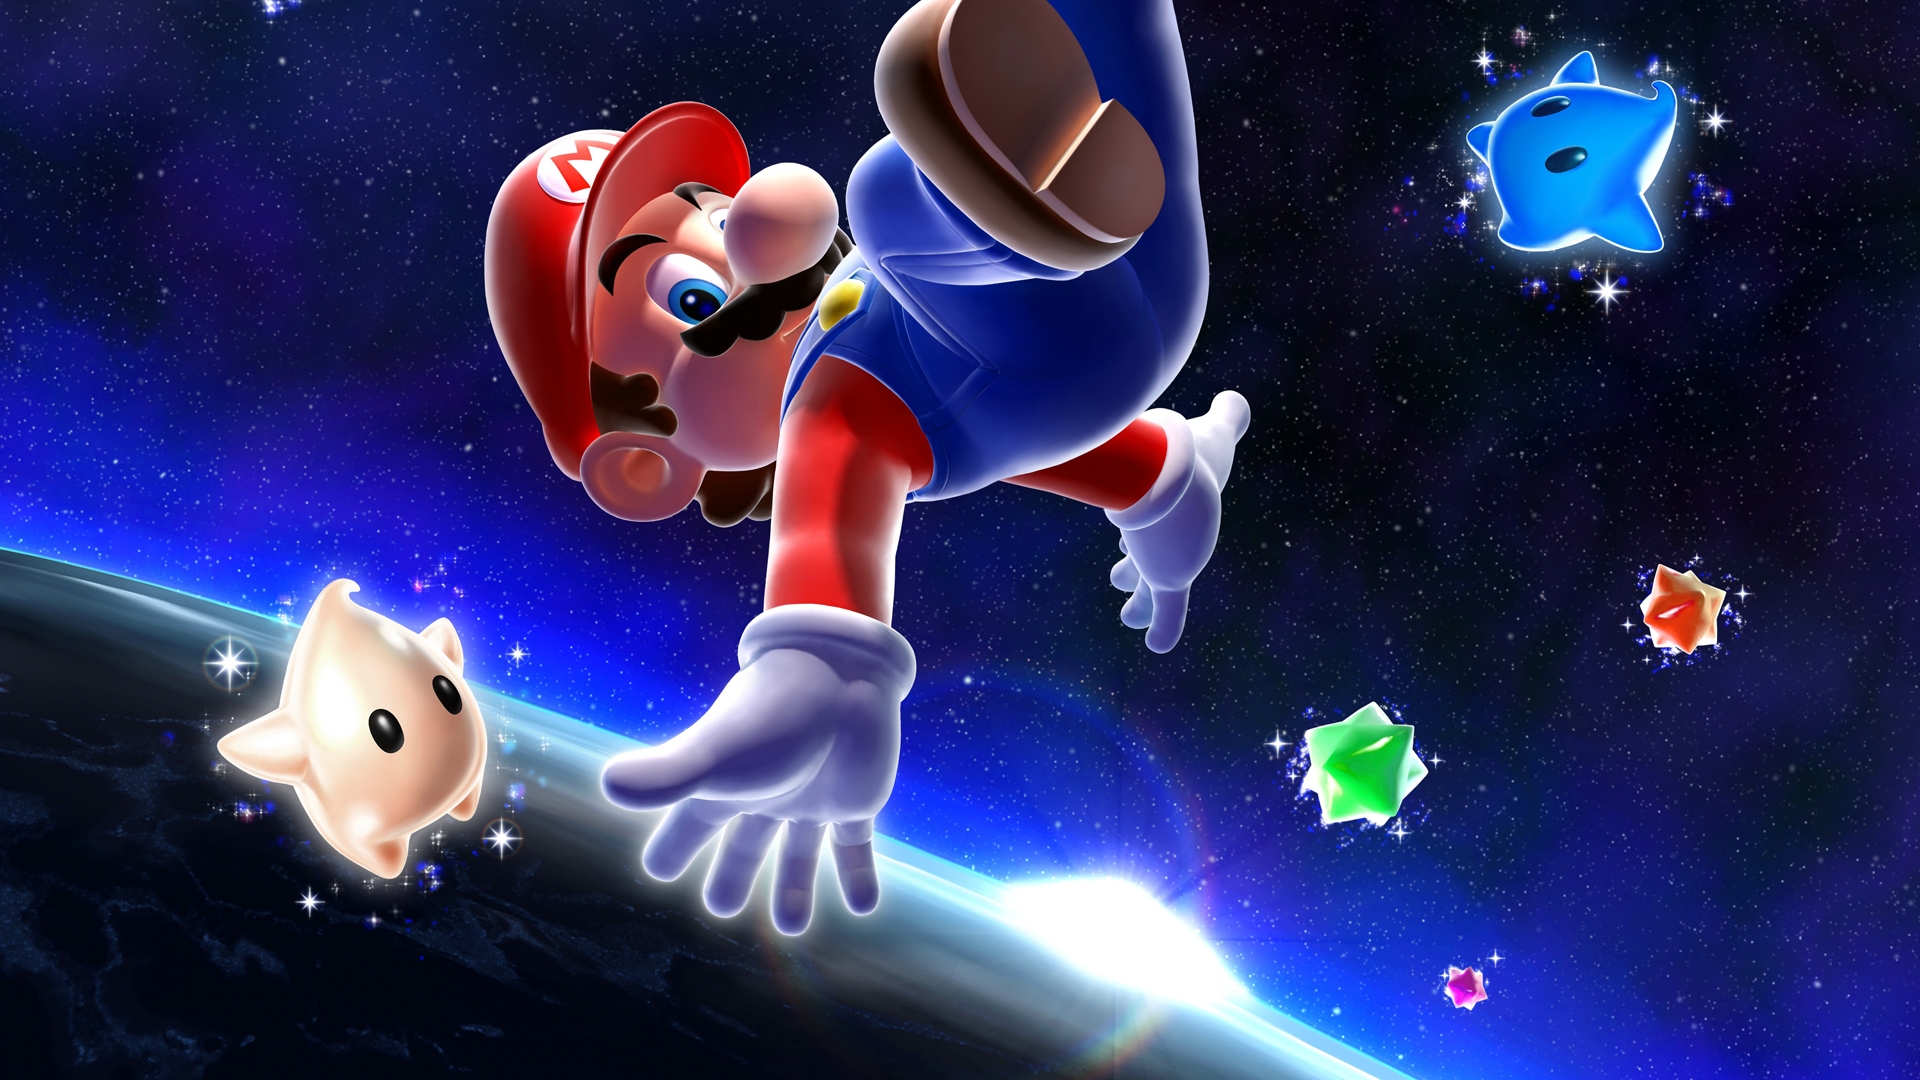 Video Game Super Mario Galaxy 1920x1080